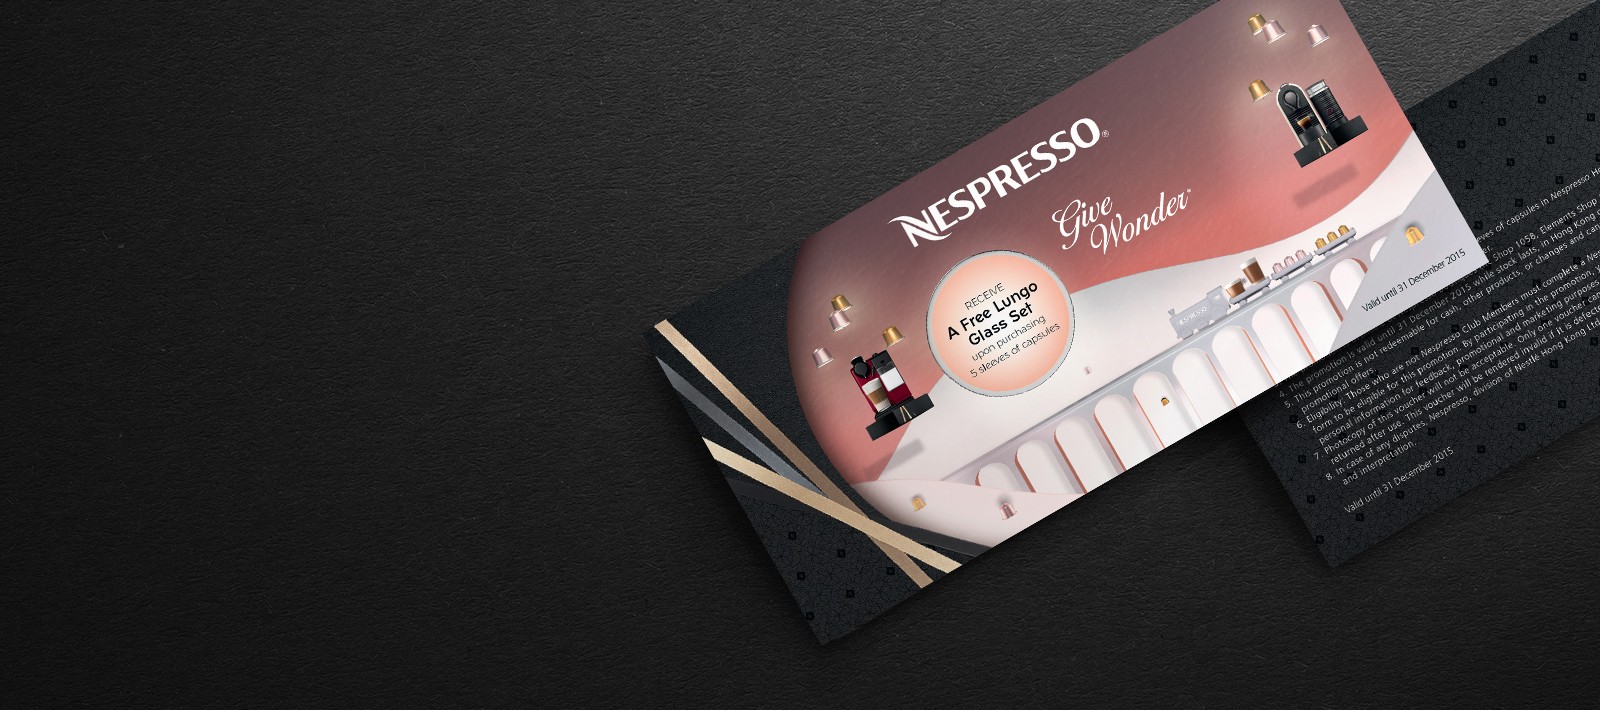 Integrated marketing for Nespresso